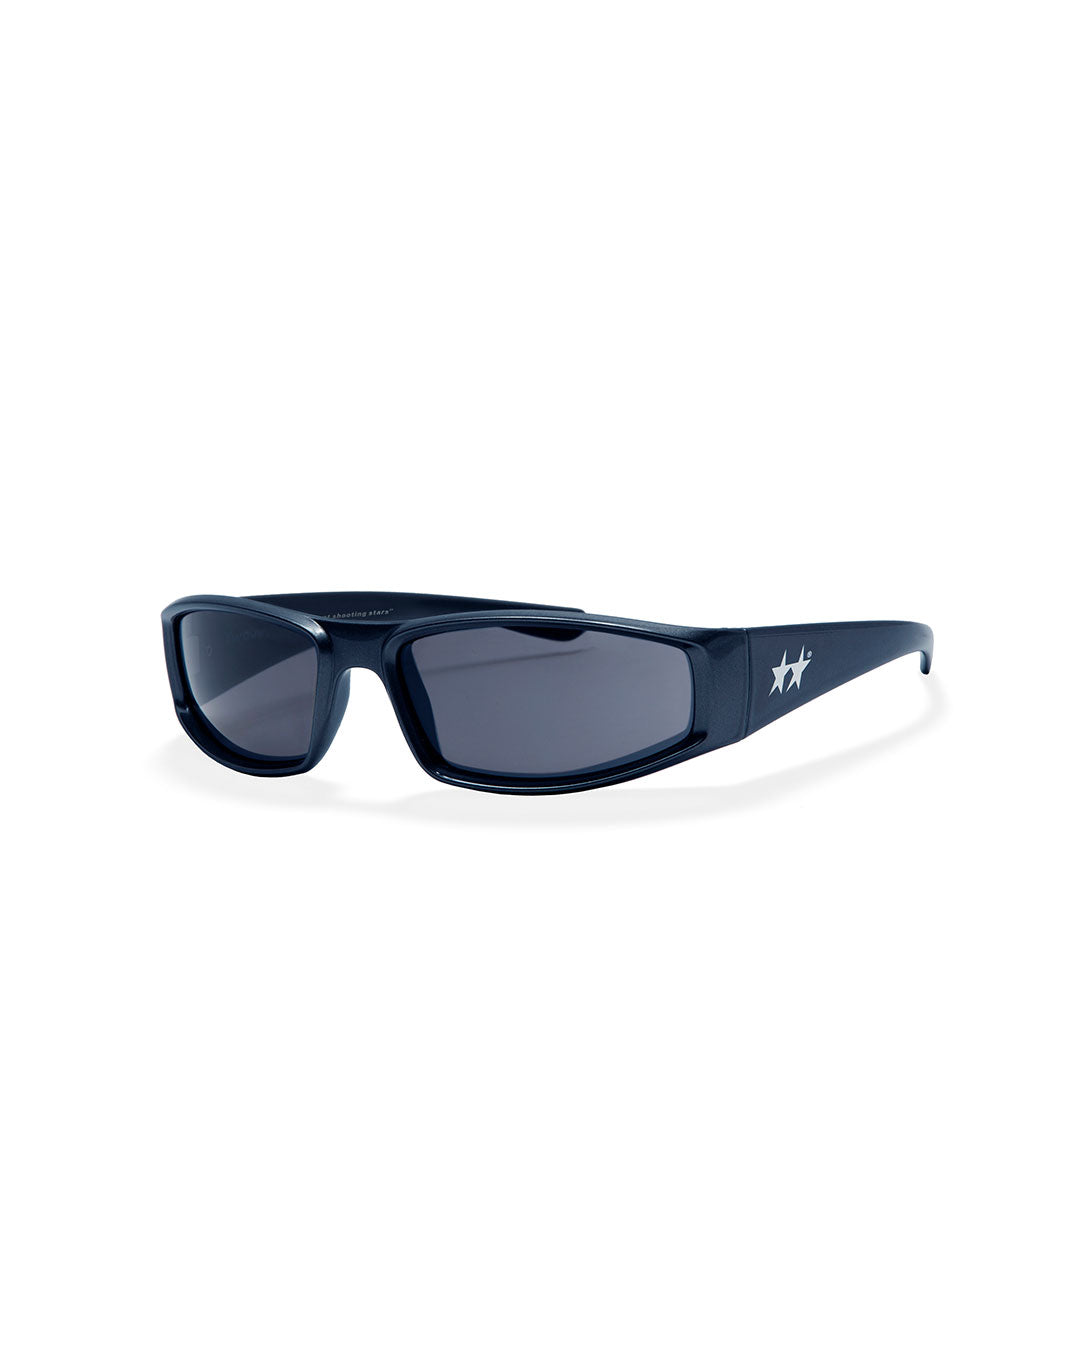 TwoJeys Ultra Navy Sunglasses